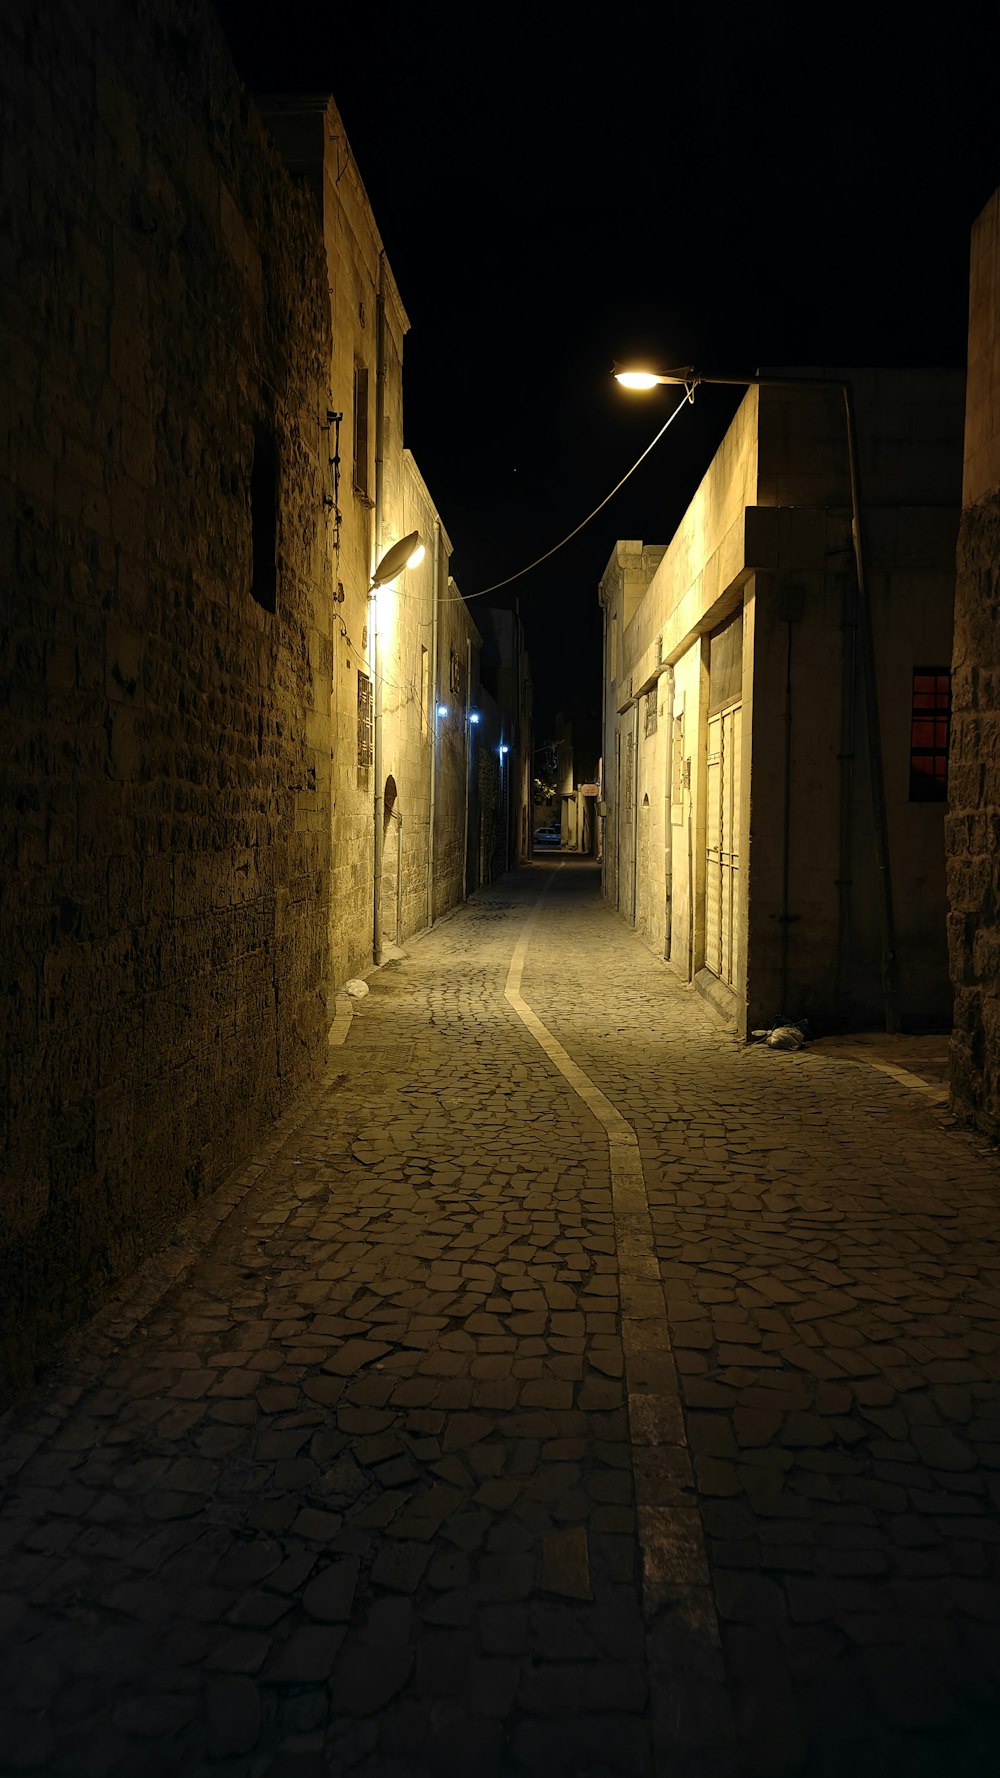 a dark alley way with cobblestones at night